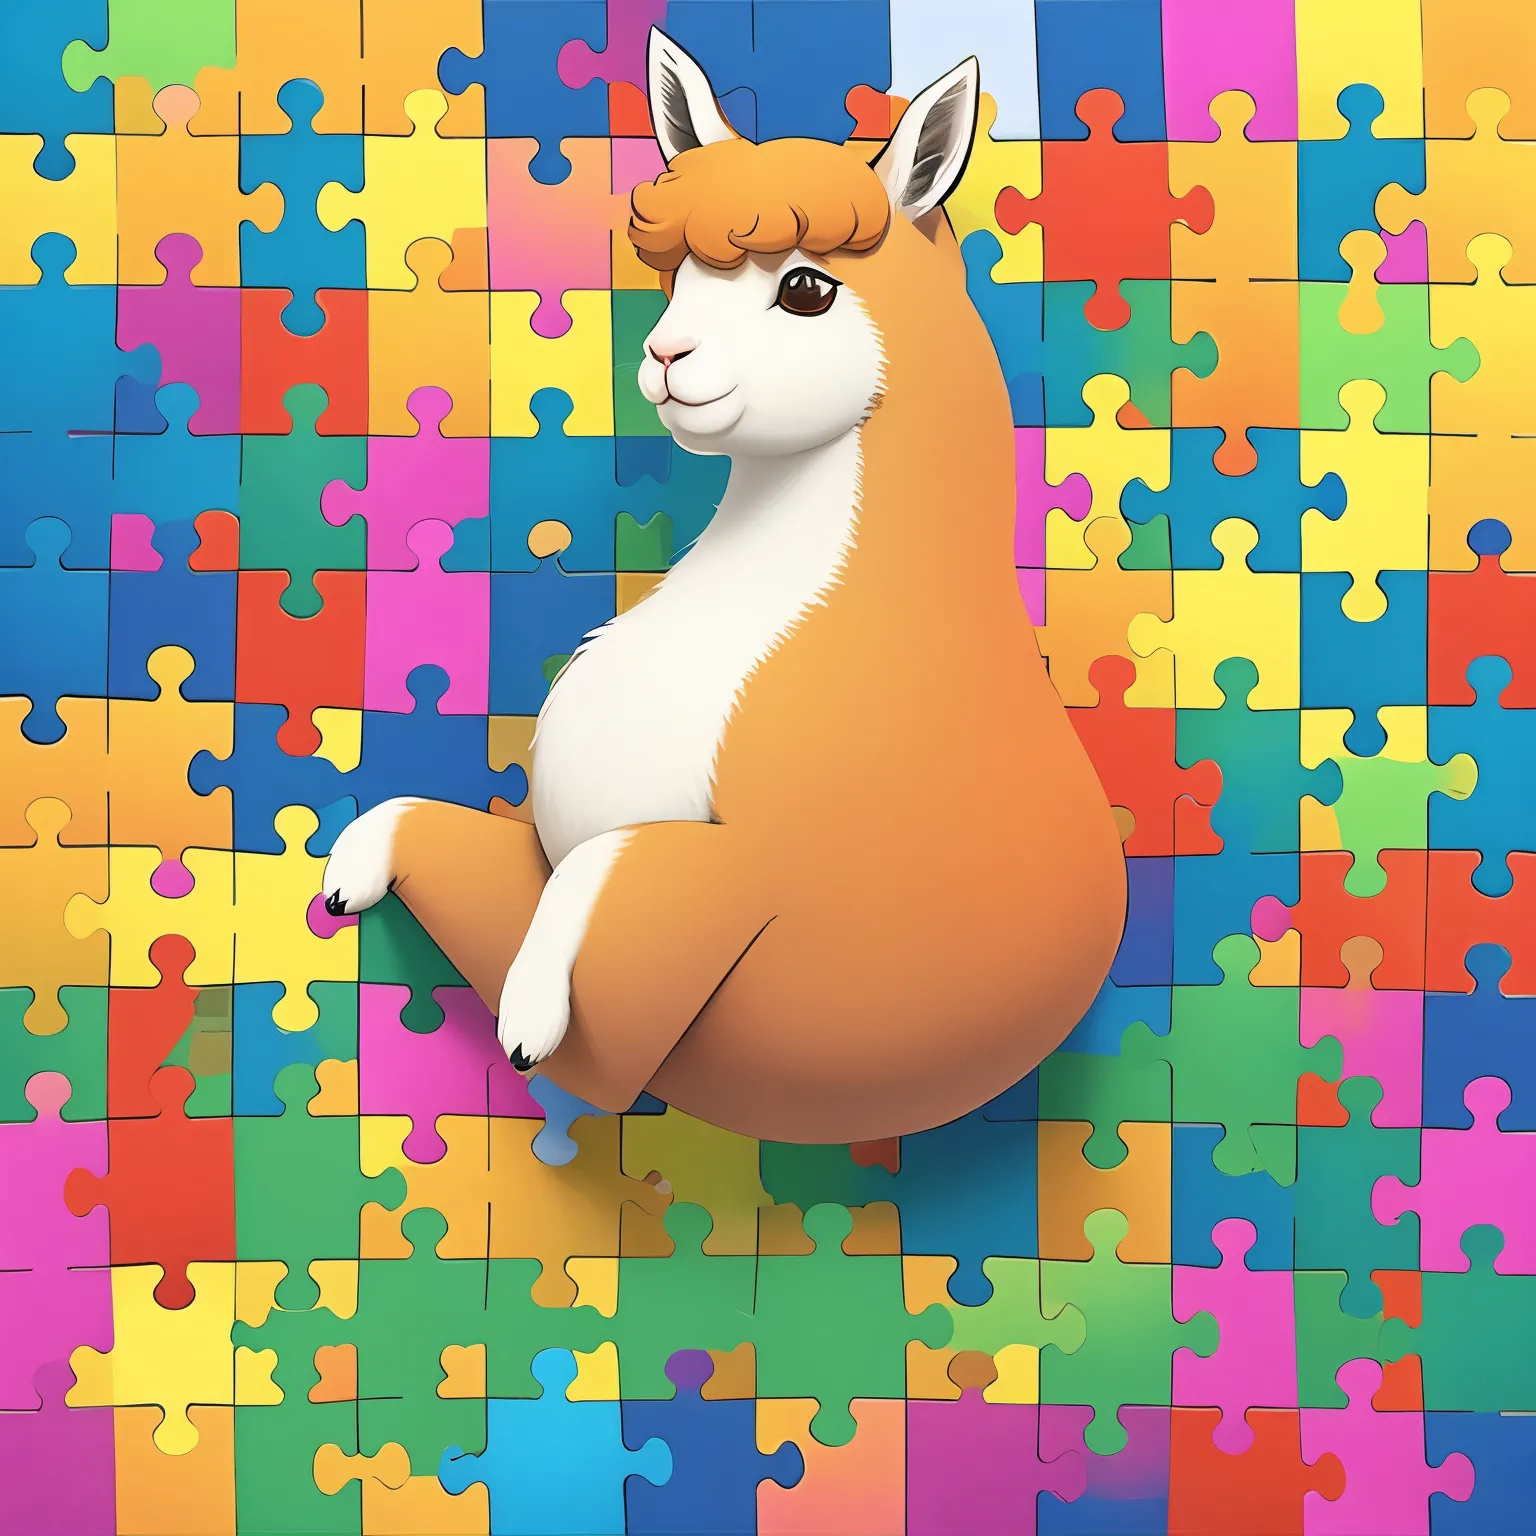 (An Alpaca),jig_puzzle, (masterpiece, best quality:1.2), (jig_puzzle), no humans